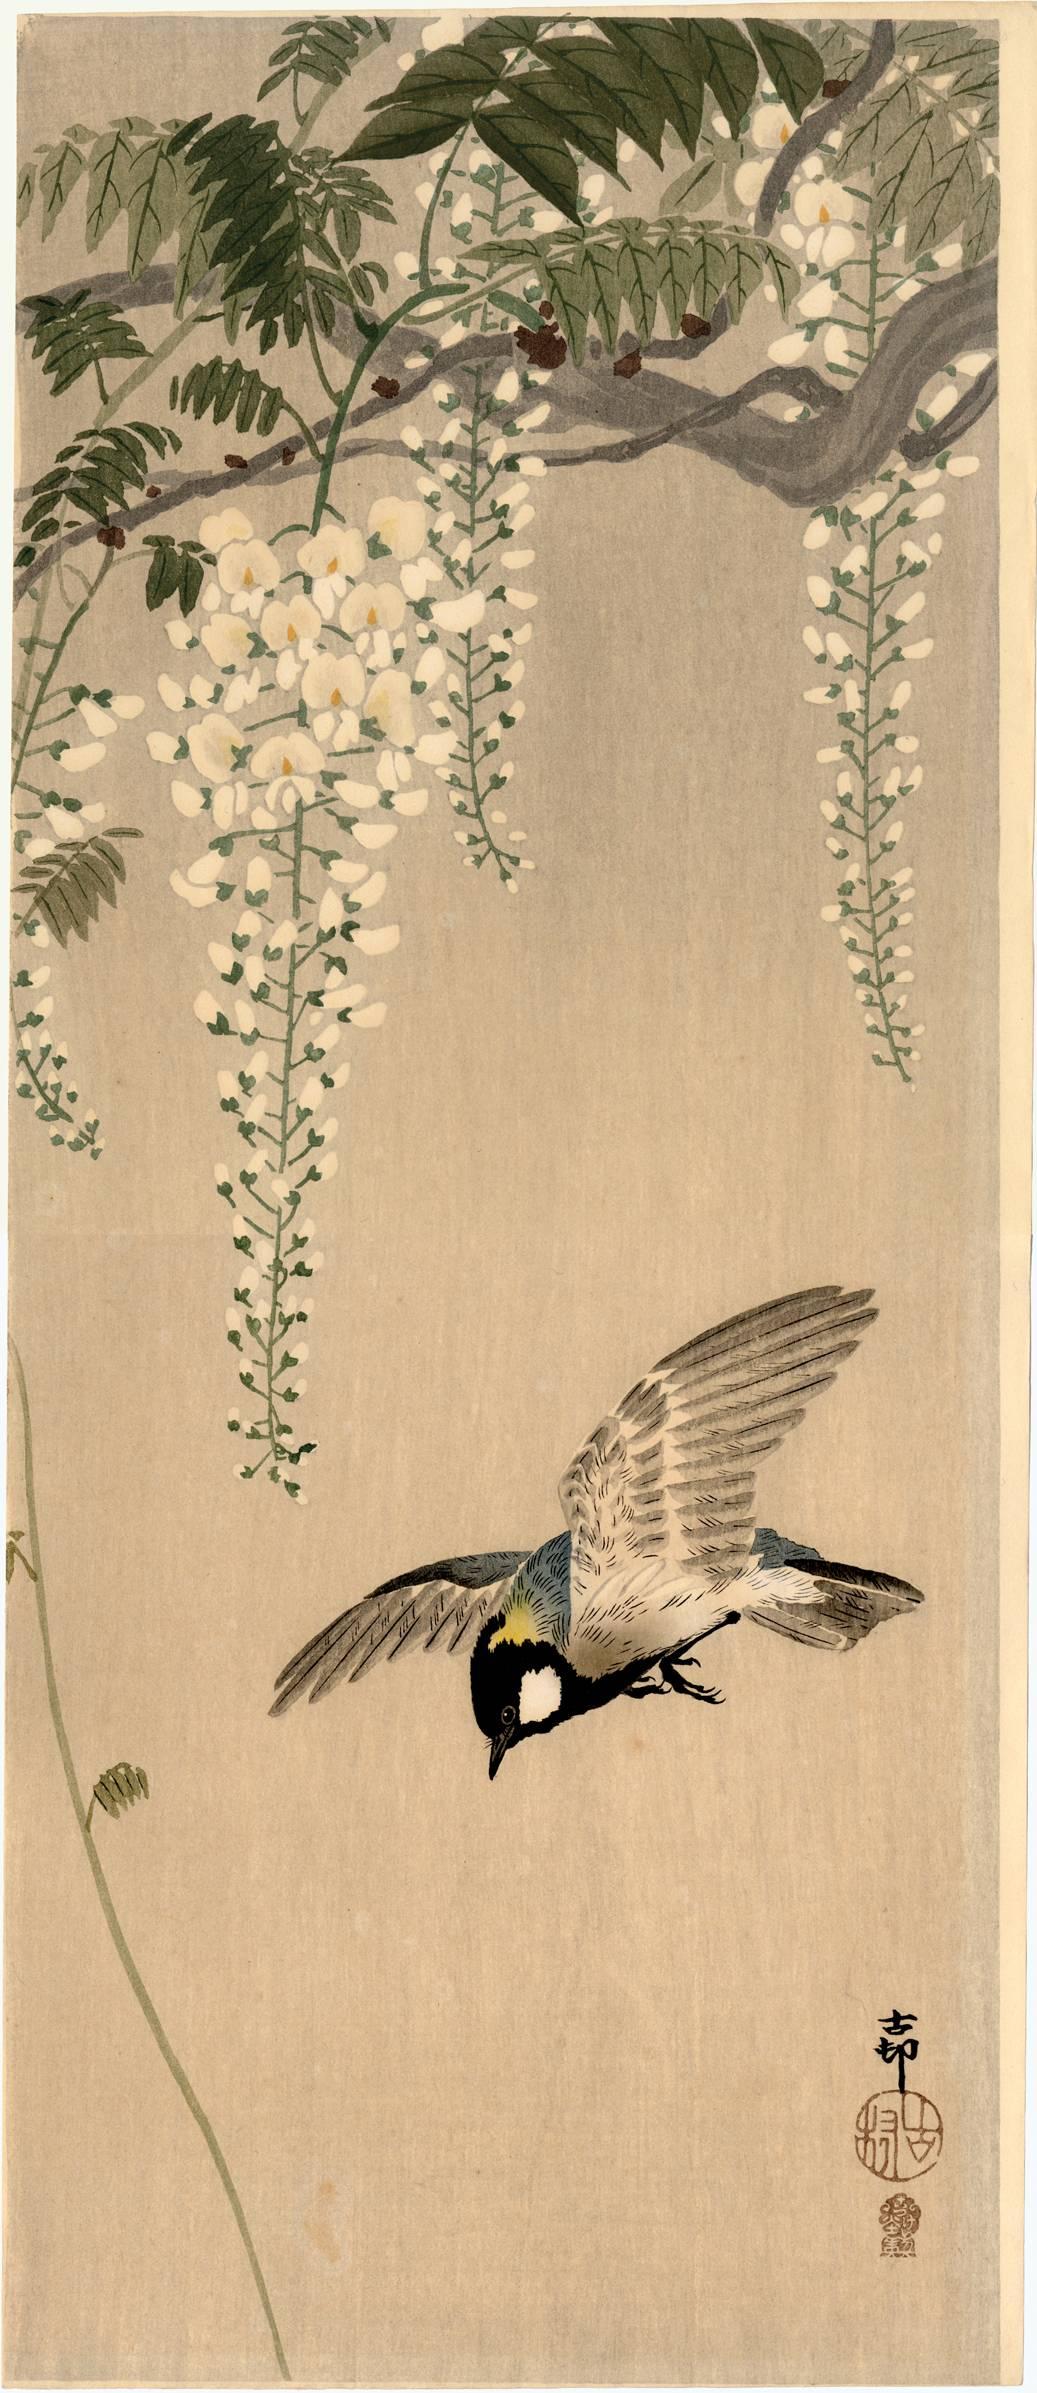 Ohara Koson Animal Print - Great Tit in Flight Beneath Wisteria Blossoms